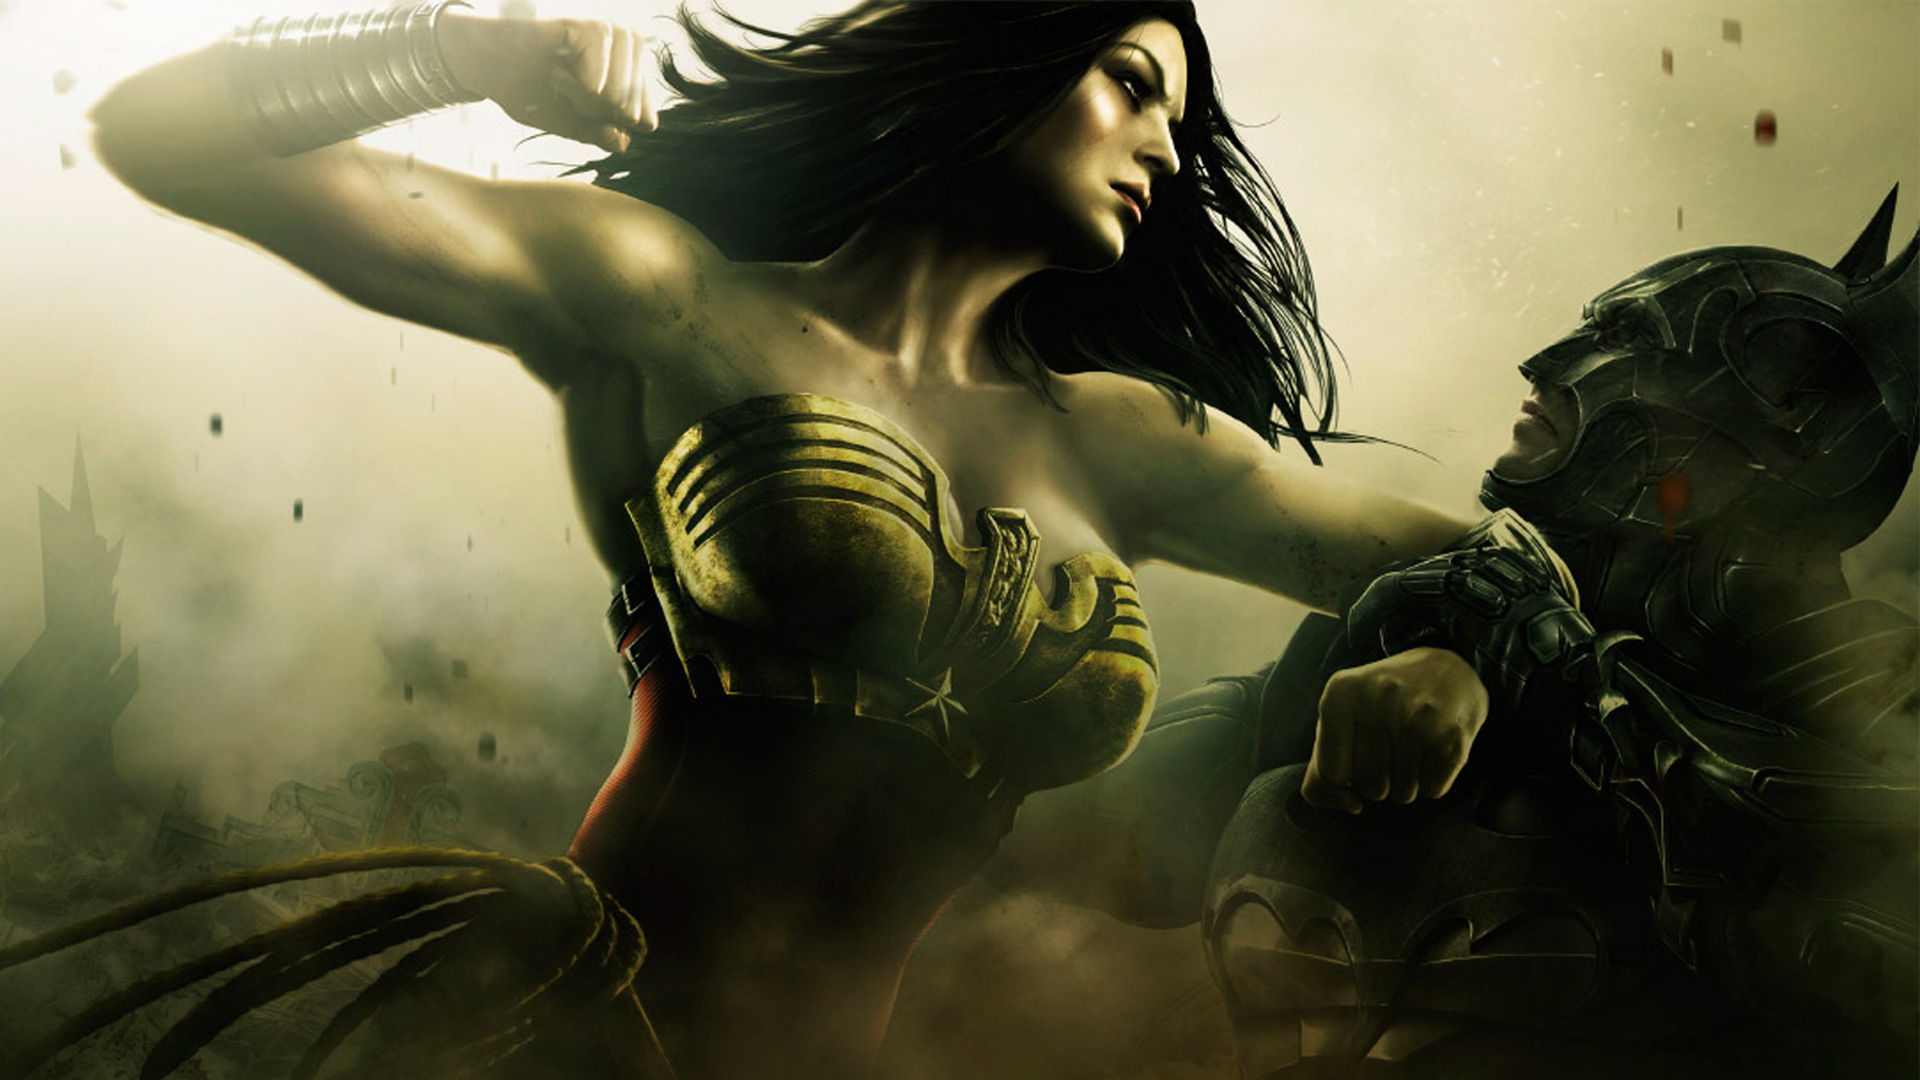 injustice: gods among us, wonder woman, video game, batman, injustice